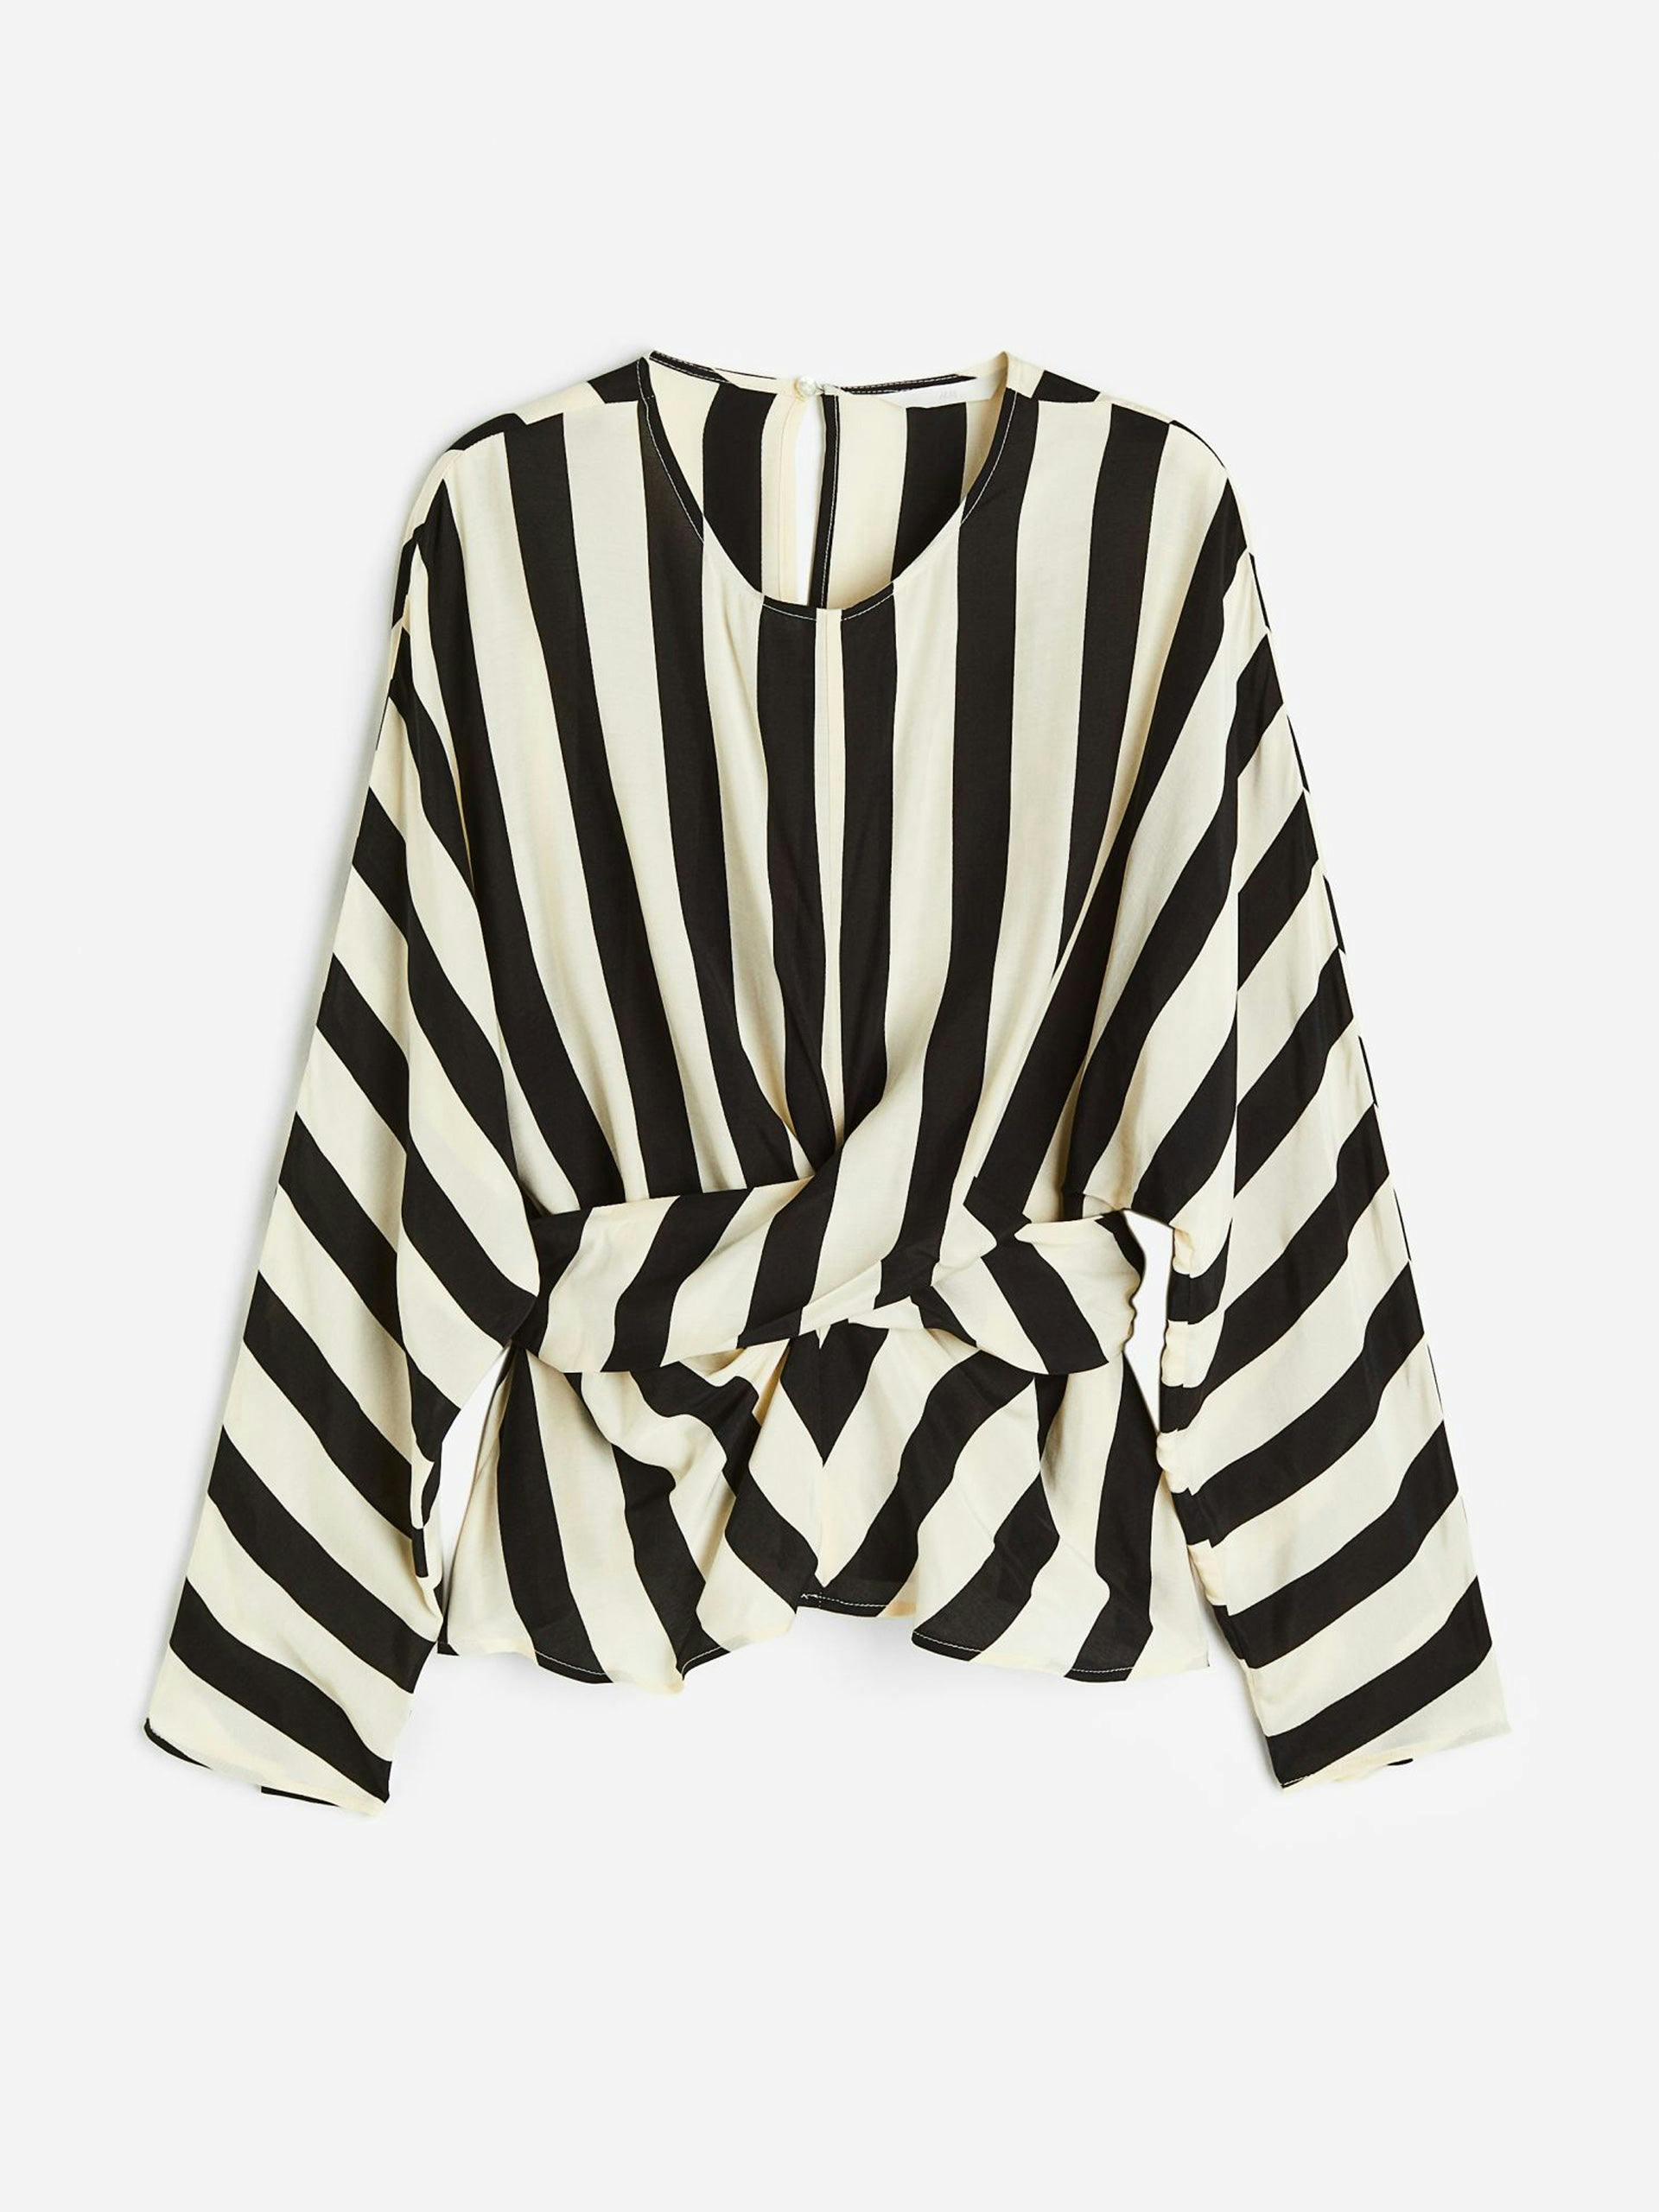 Black and white stripe blouse